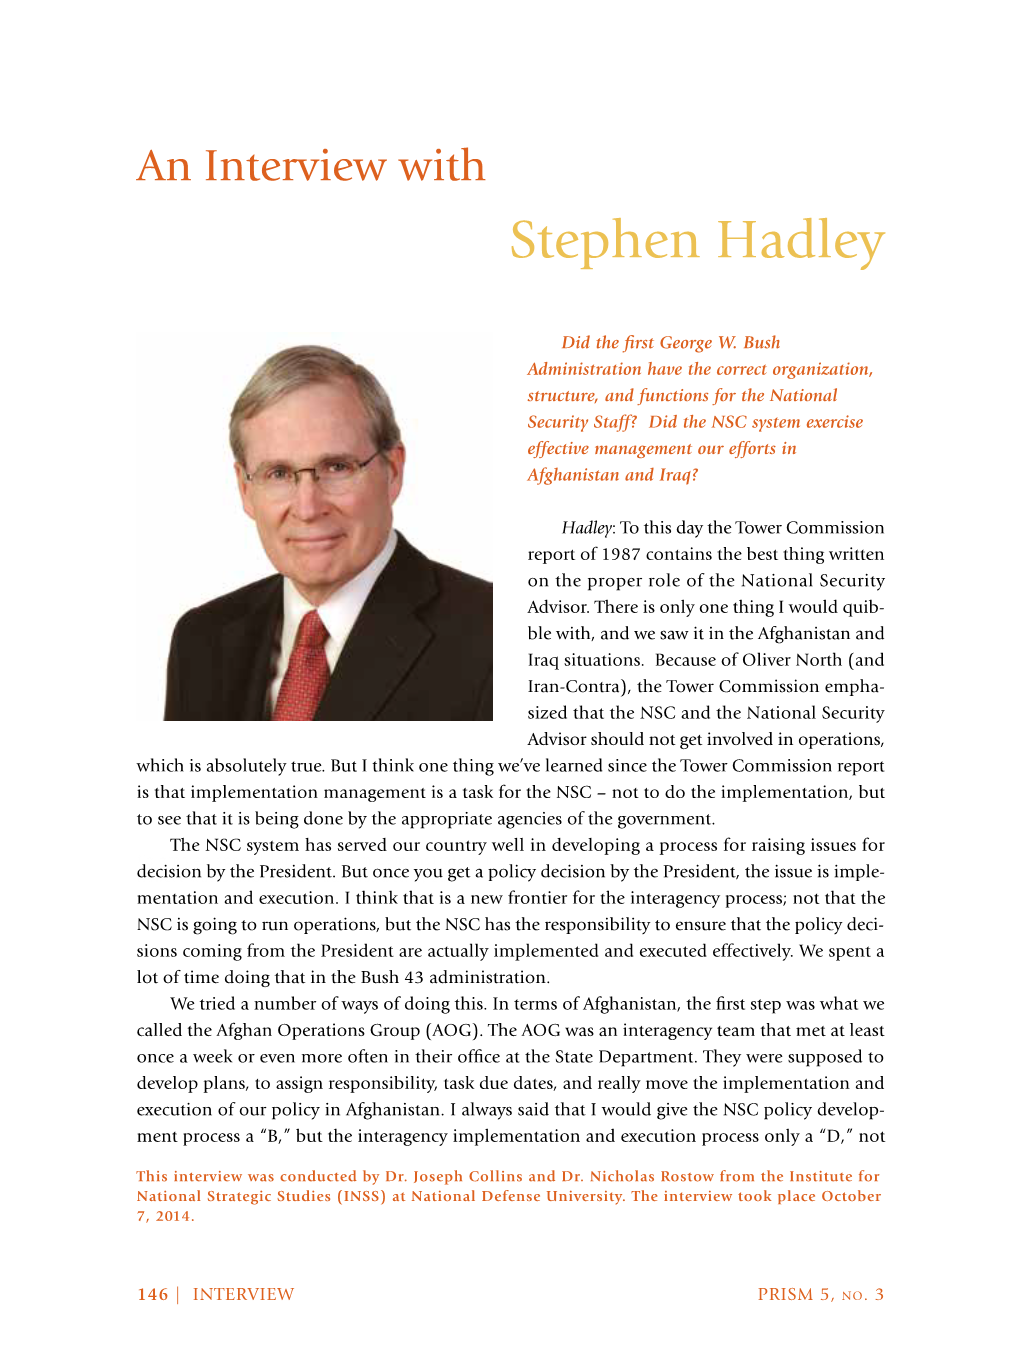 Stephen Hadley